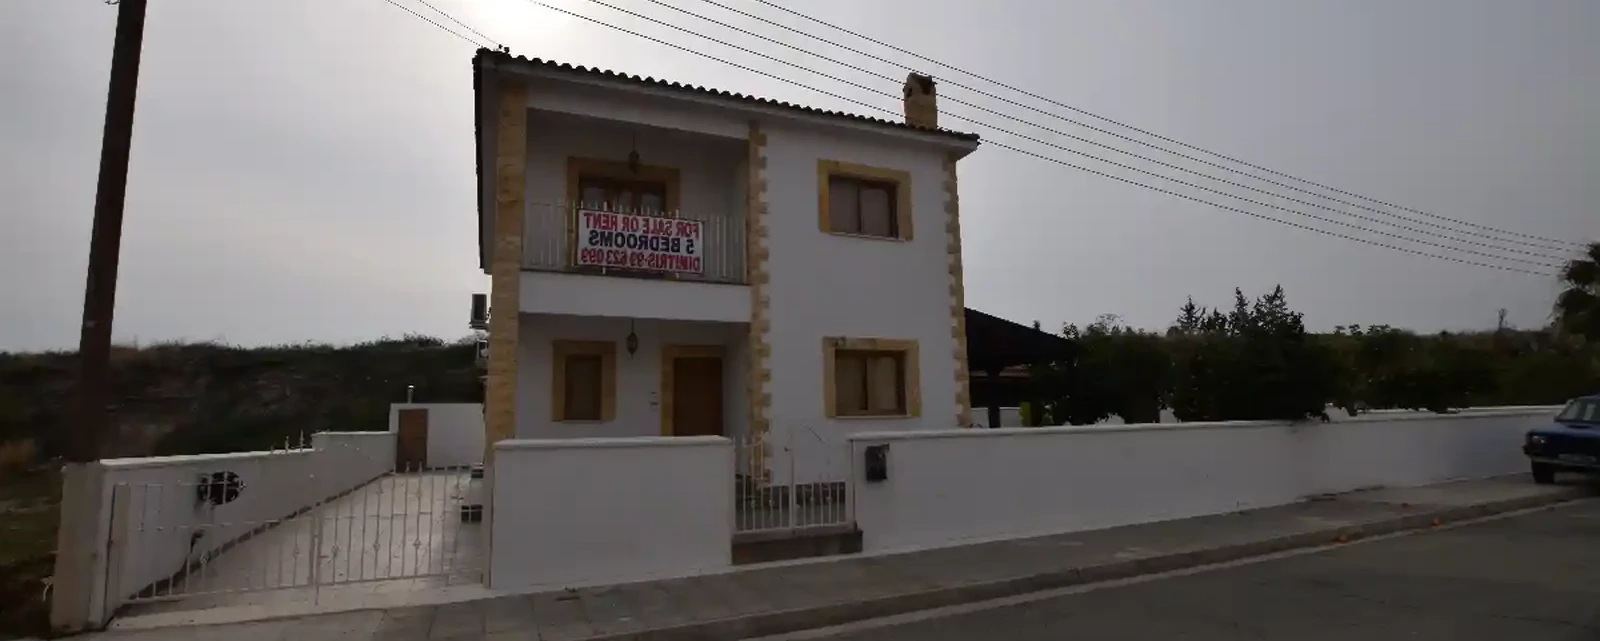 5-bedroom detached house to rent €2.000, image 1